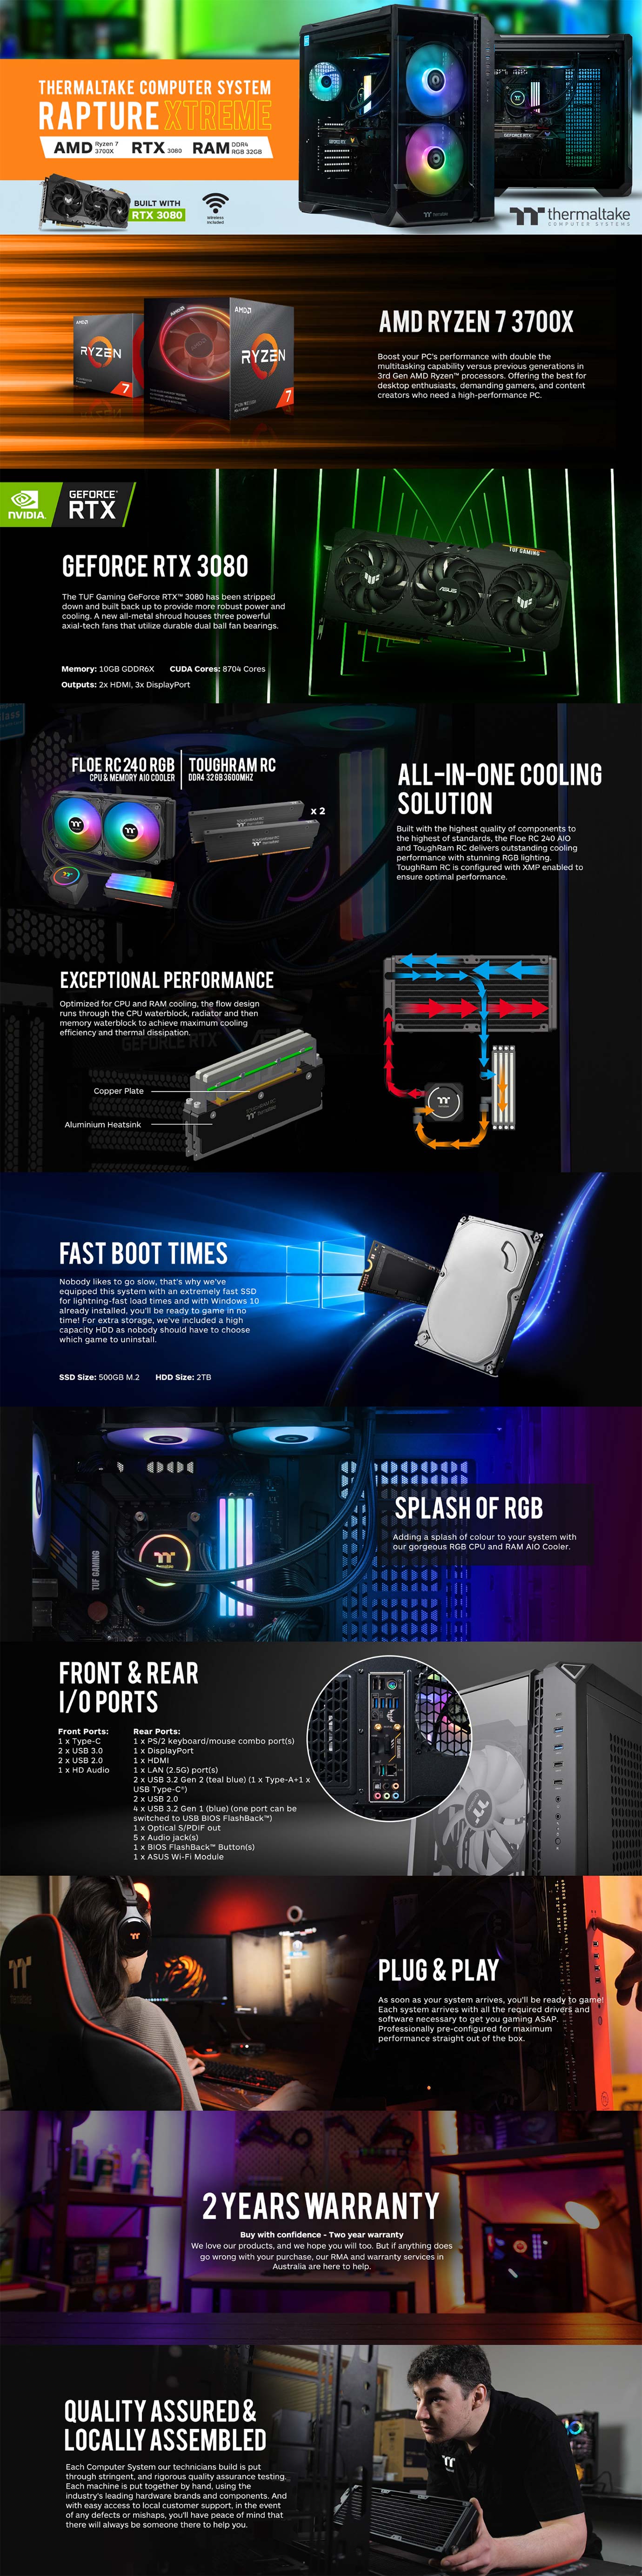 Thermaltake-Rapture-Xtreme-AMD-Computer-System.jpg